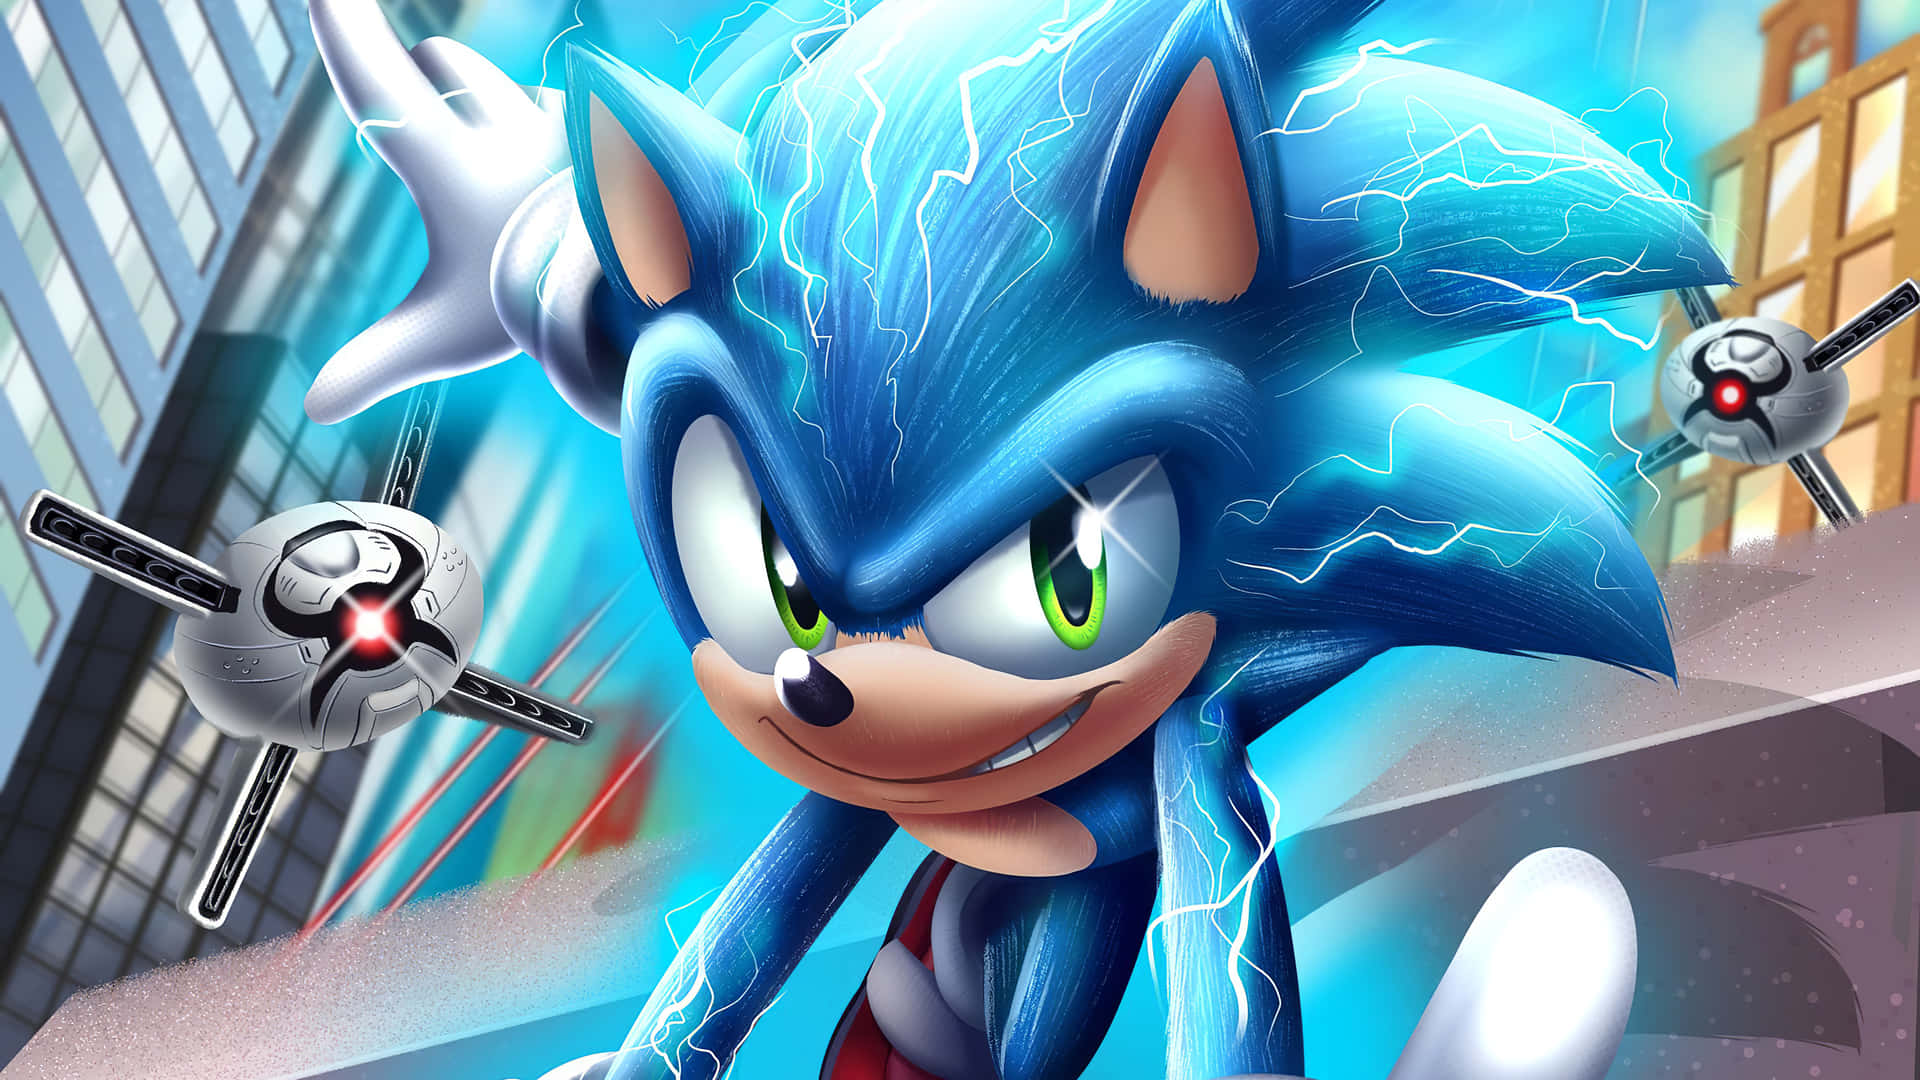 Sonic The Hedgehog, speedster and defender of the world